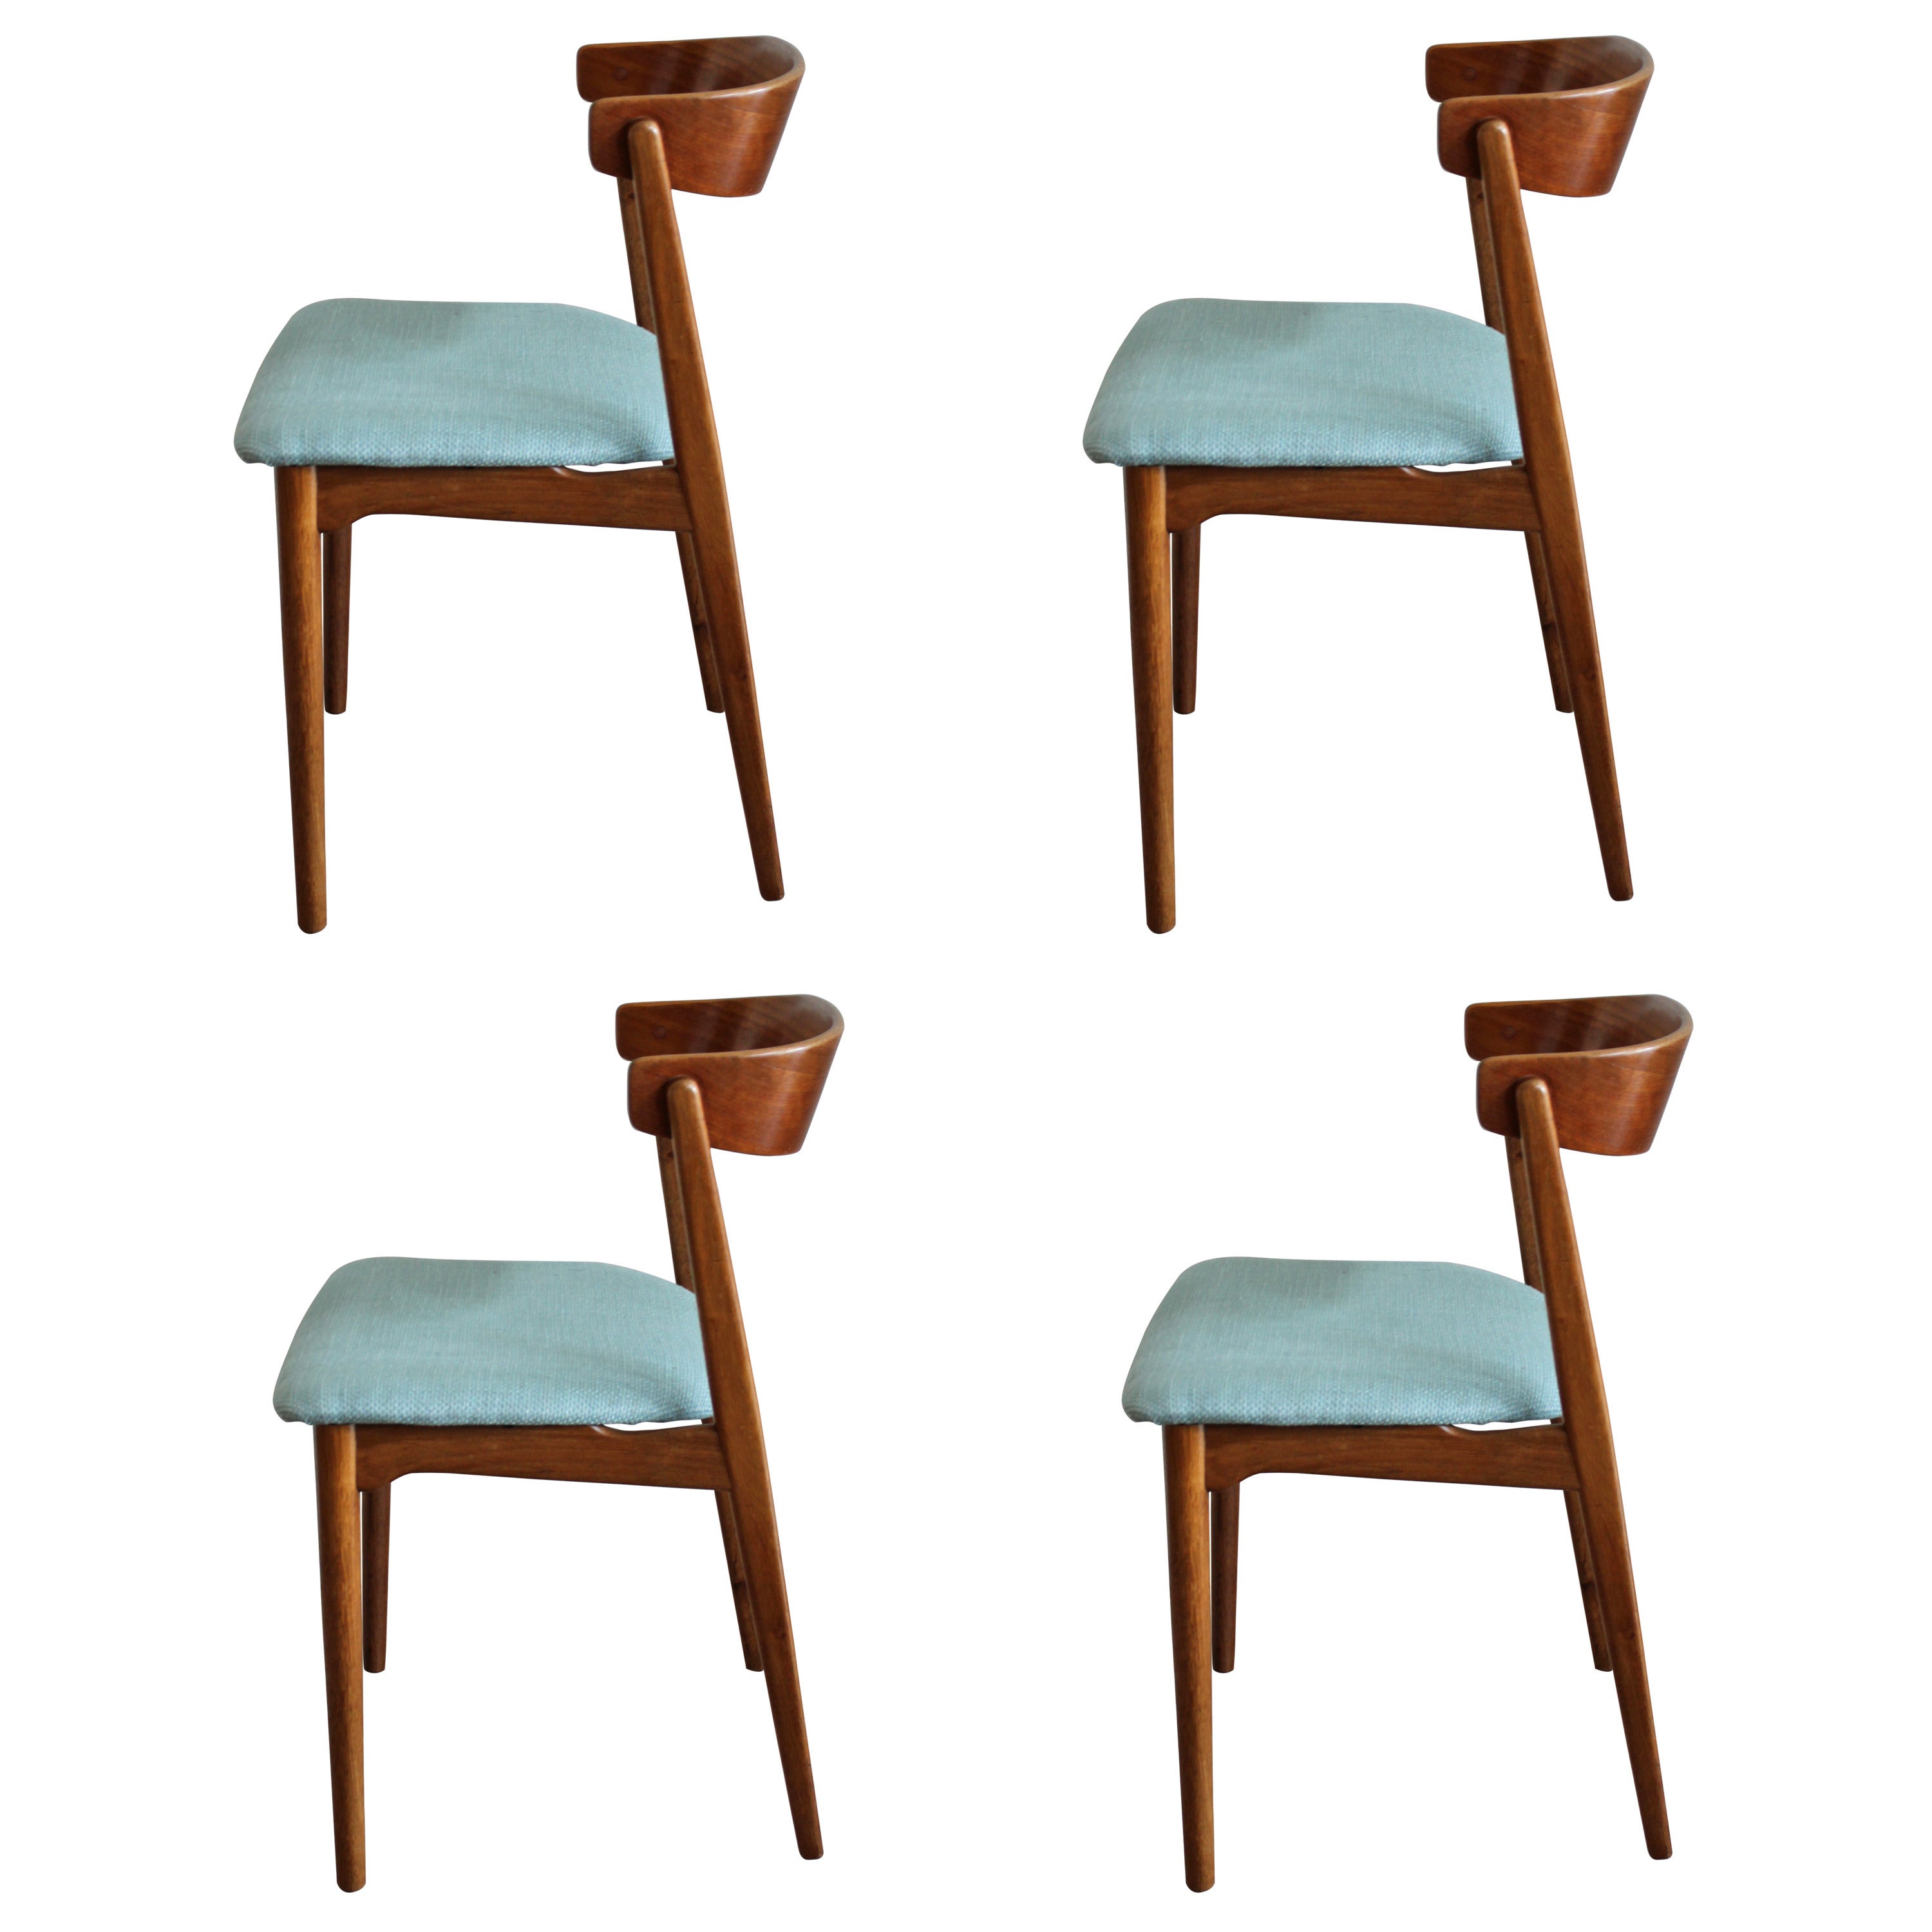 Set of Four Mid-Century Modern Teak Chairs